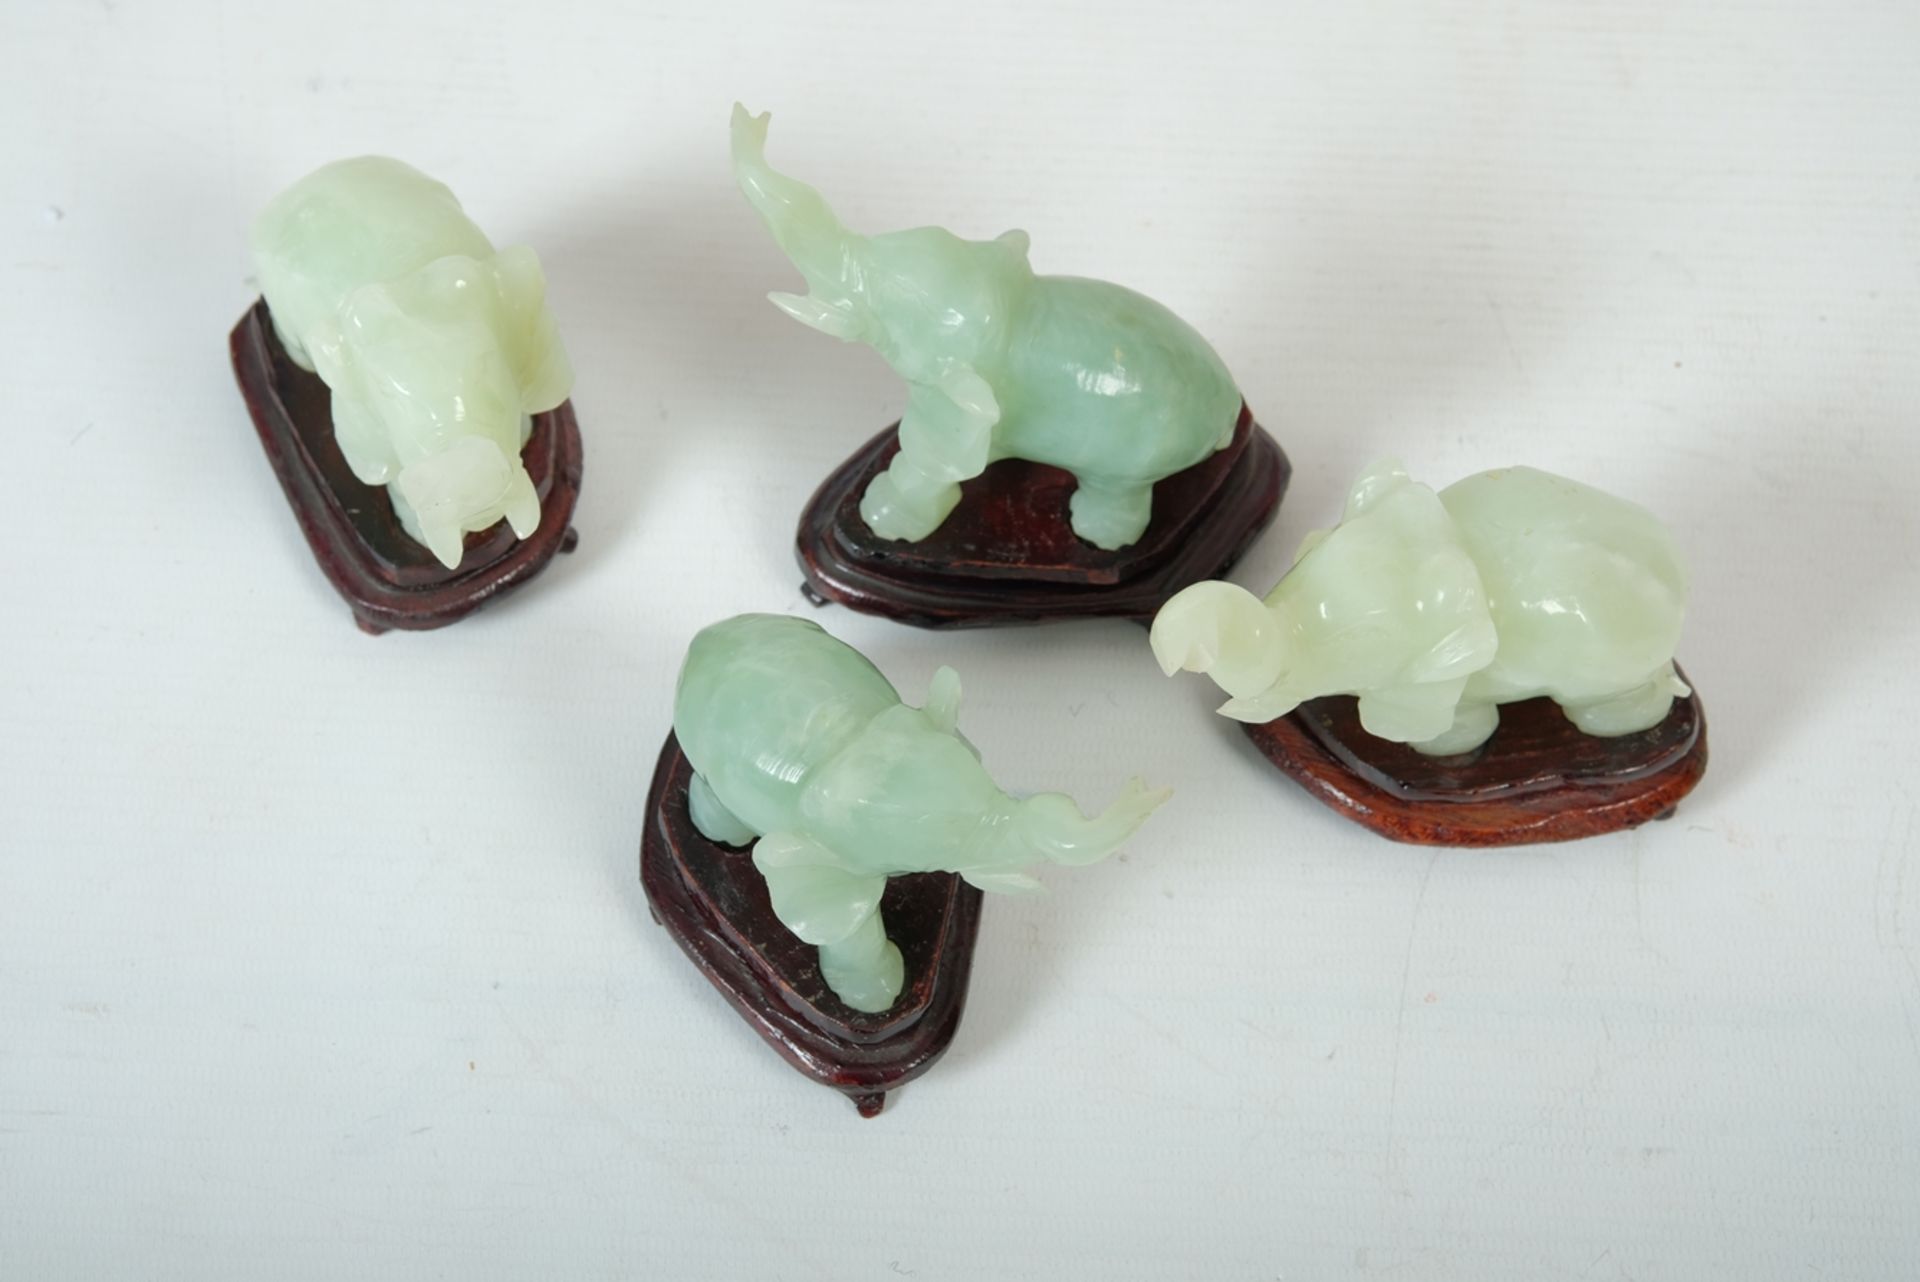 Jade elephants,four pieces, China. One elephant chipped. - Image 2 of 2